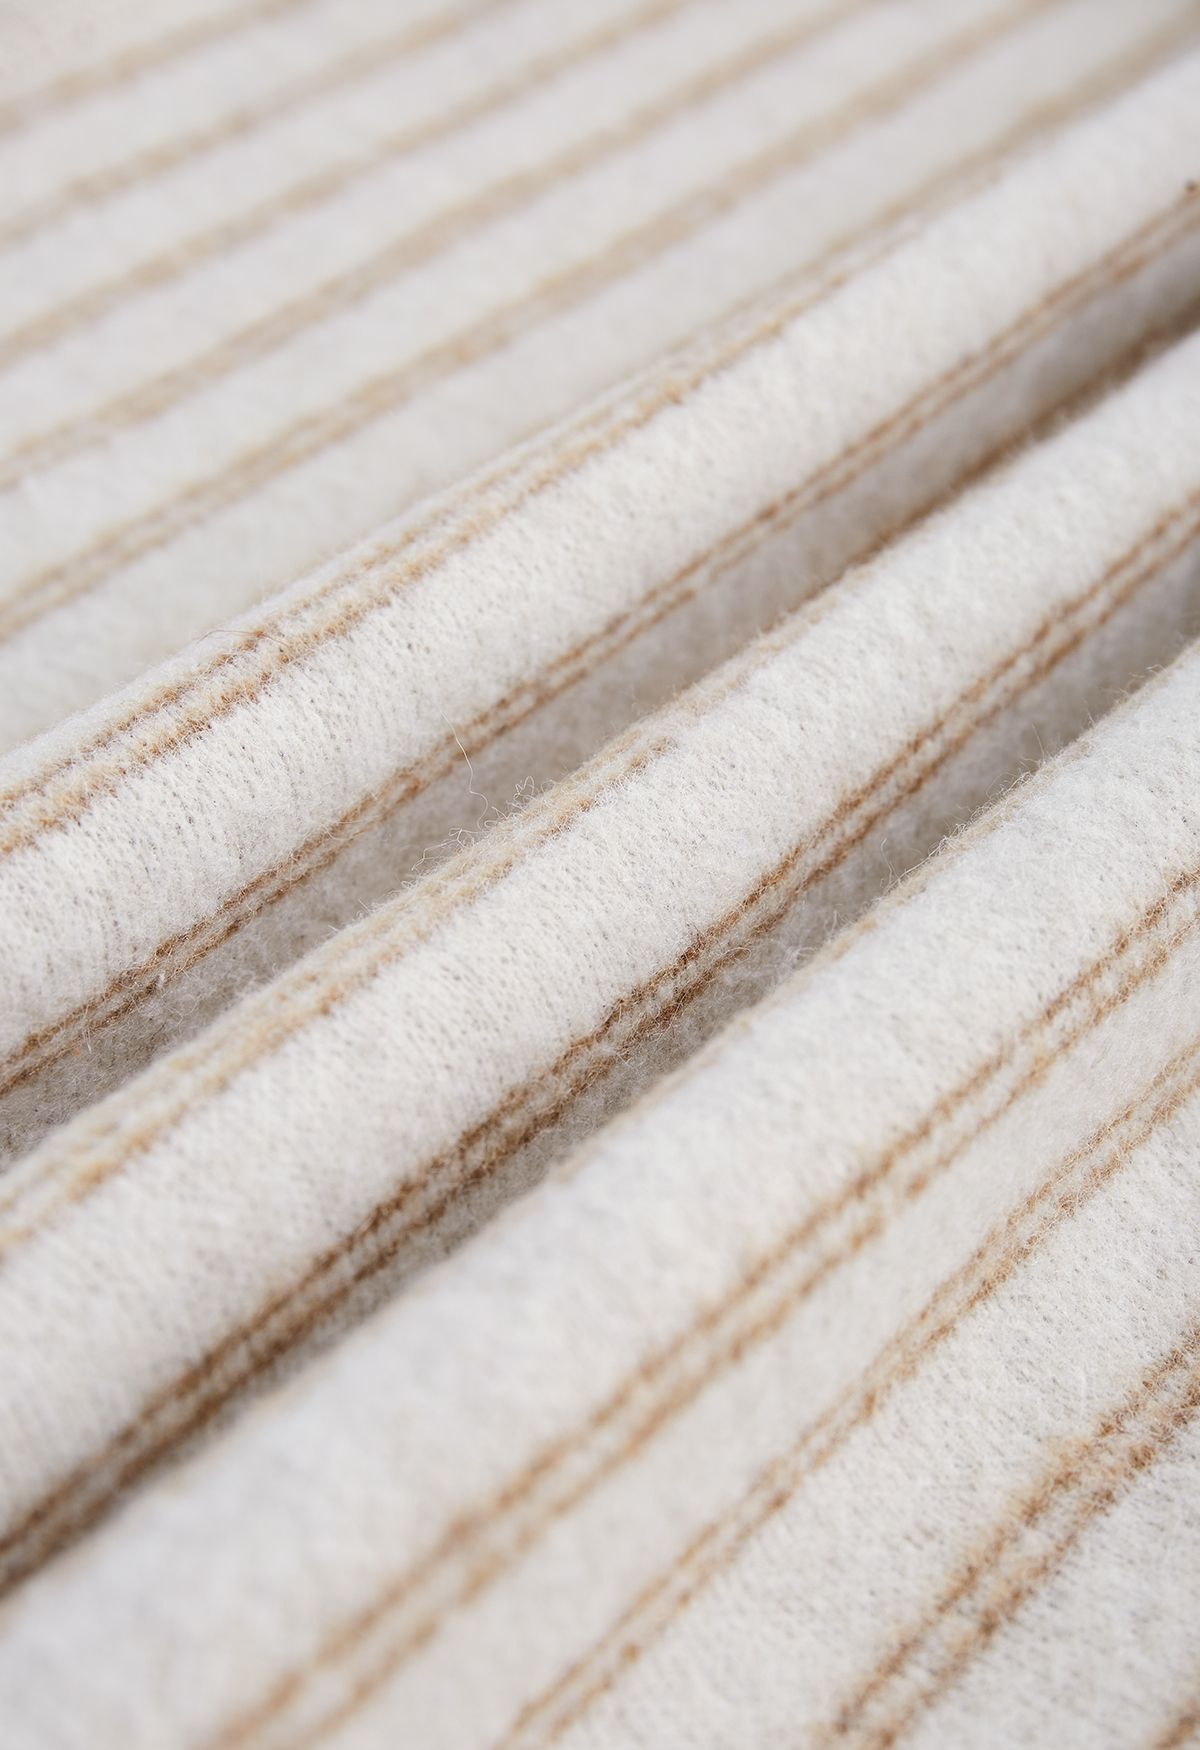 Poncho in pelliccia sintetica in misto lana a righe verticali